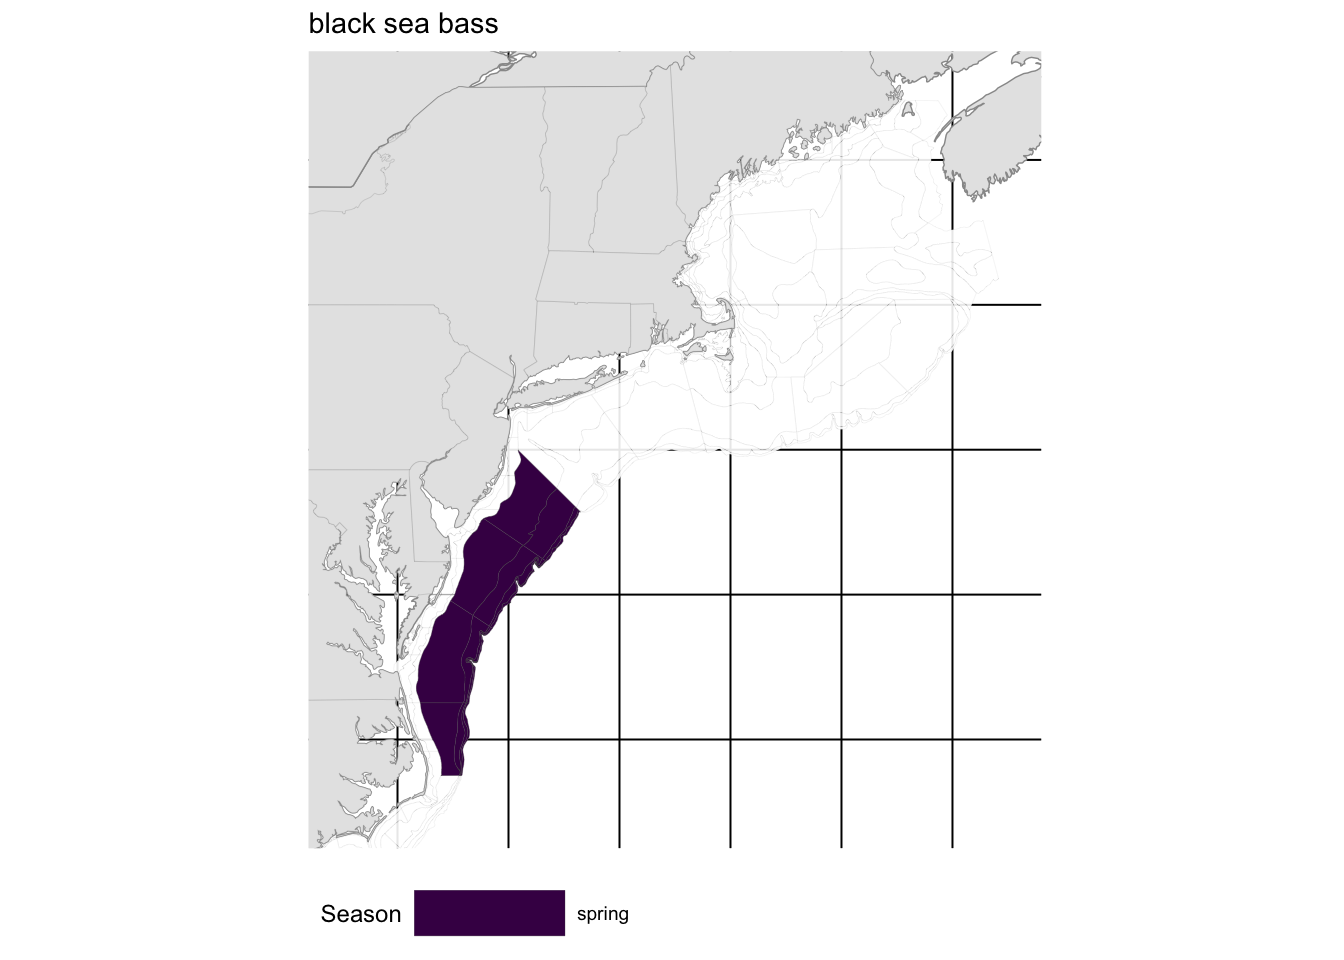 Strata map for the southern component of the black sea bass (*Centropristis striata*) stock on the NE shelf.